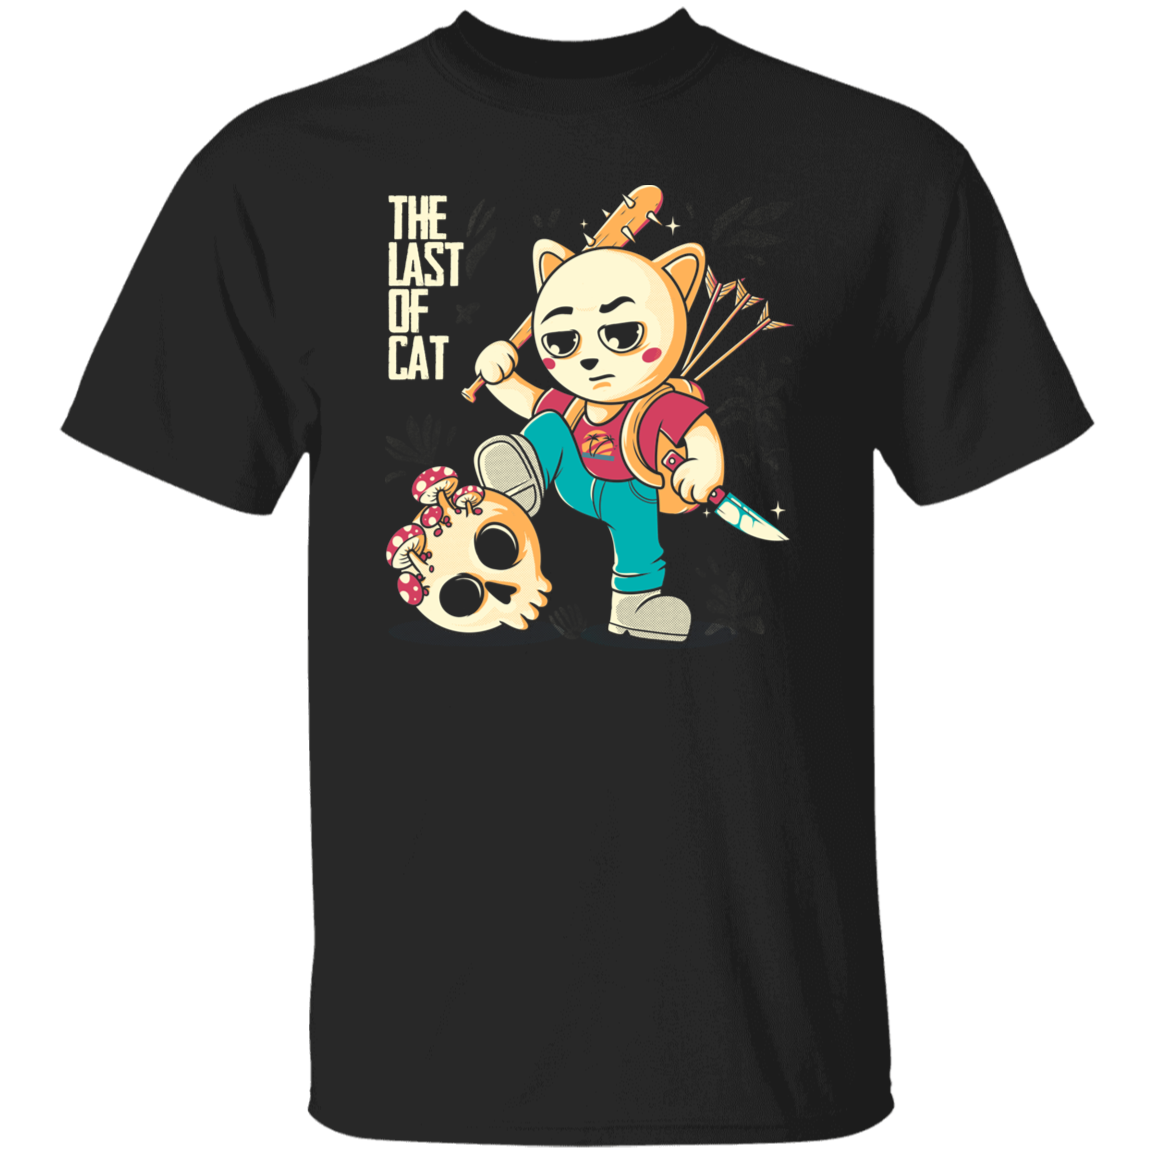 The Last of Cat T-Shirt